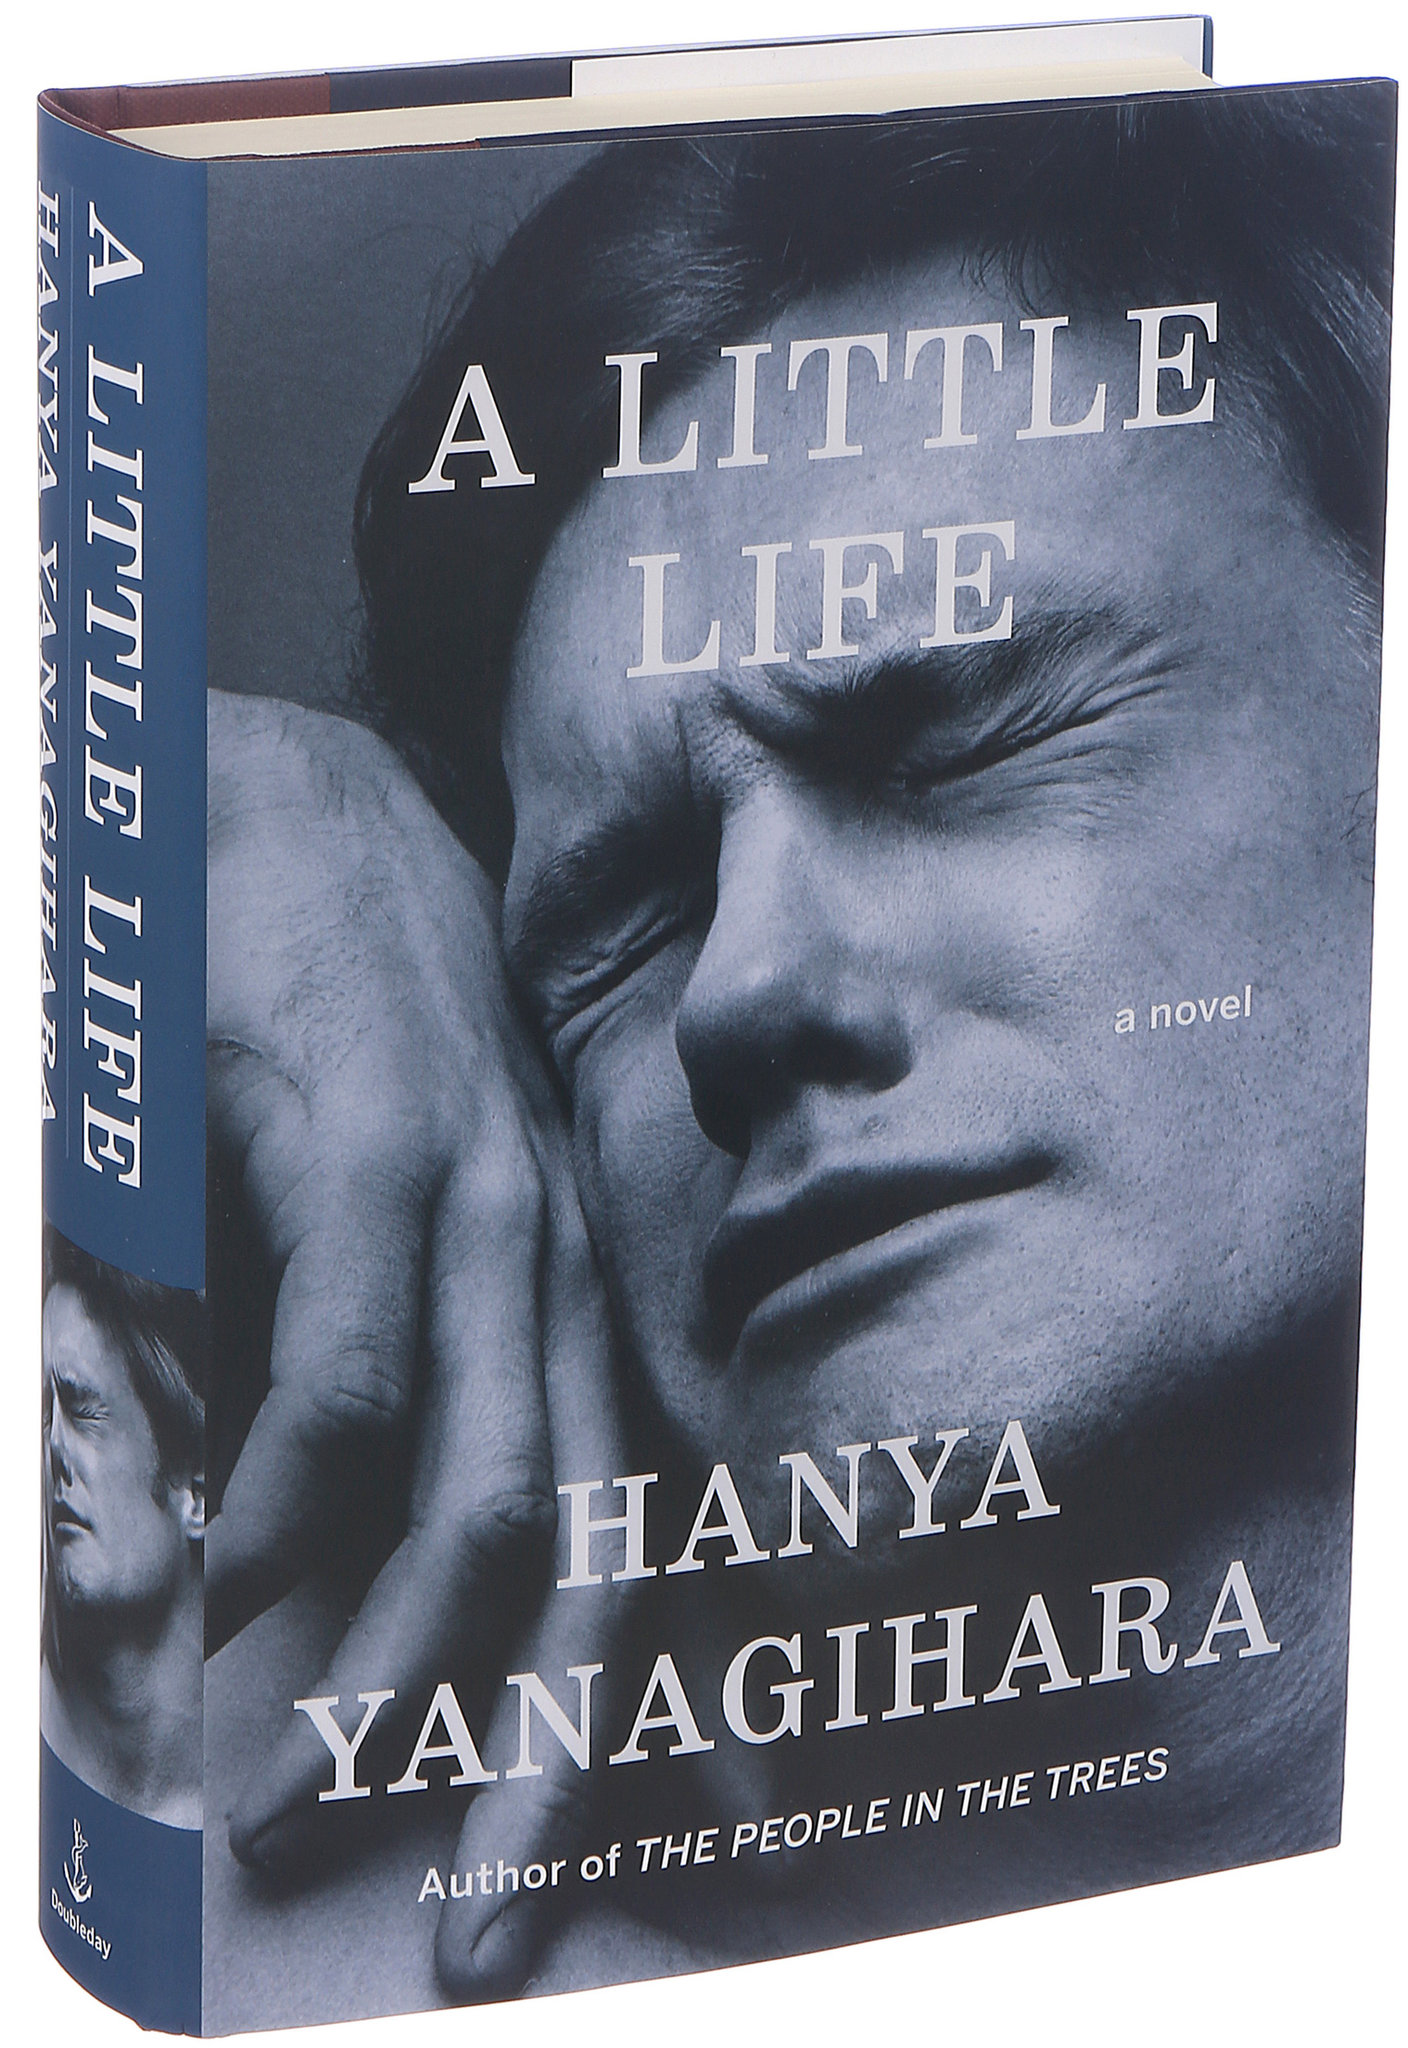 Tan poca vida: Hanya Yanagihara – Libro Libertate